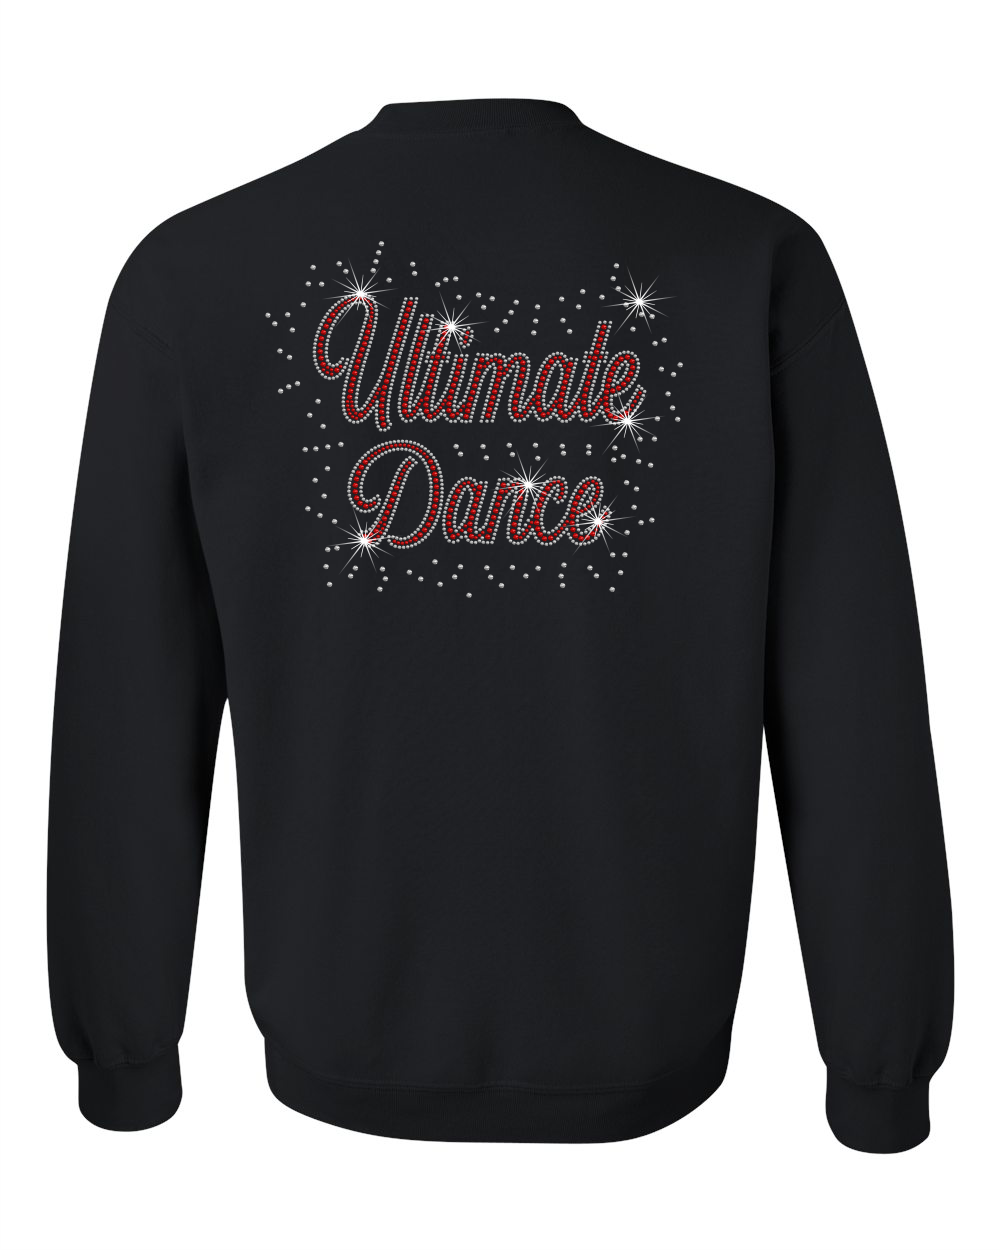 Ultimate Dance On The Move Unisex Crewneck Sweatshirt Youth/Adult Sizes